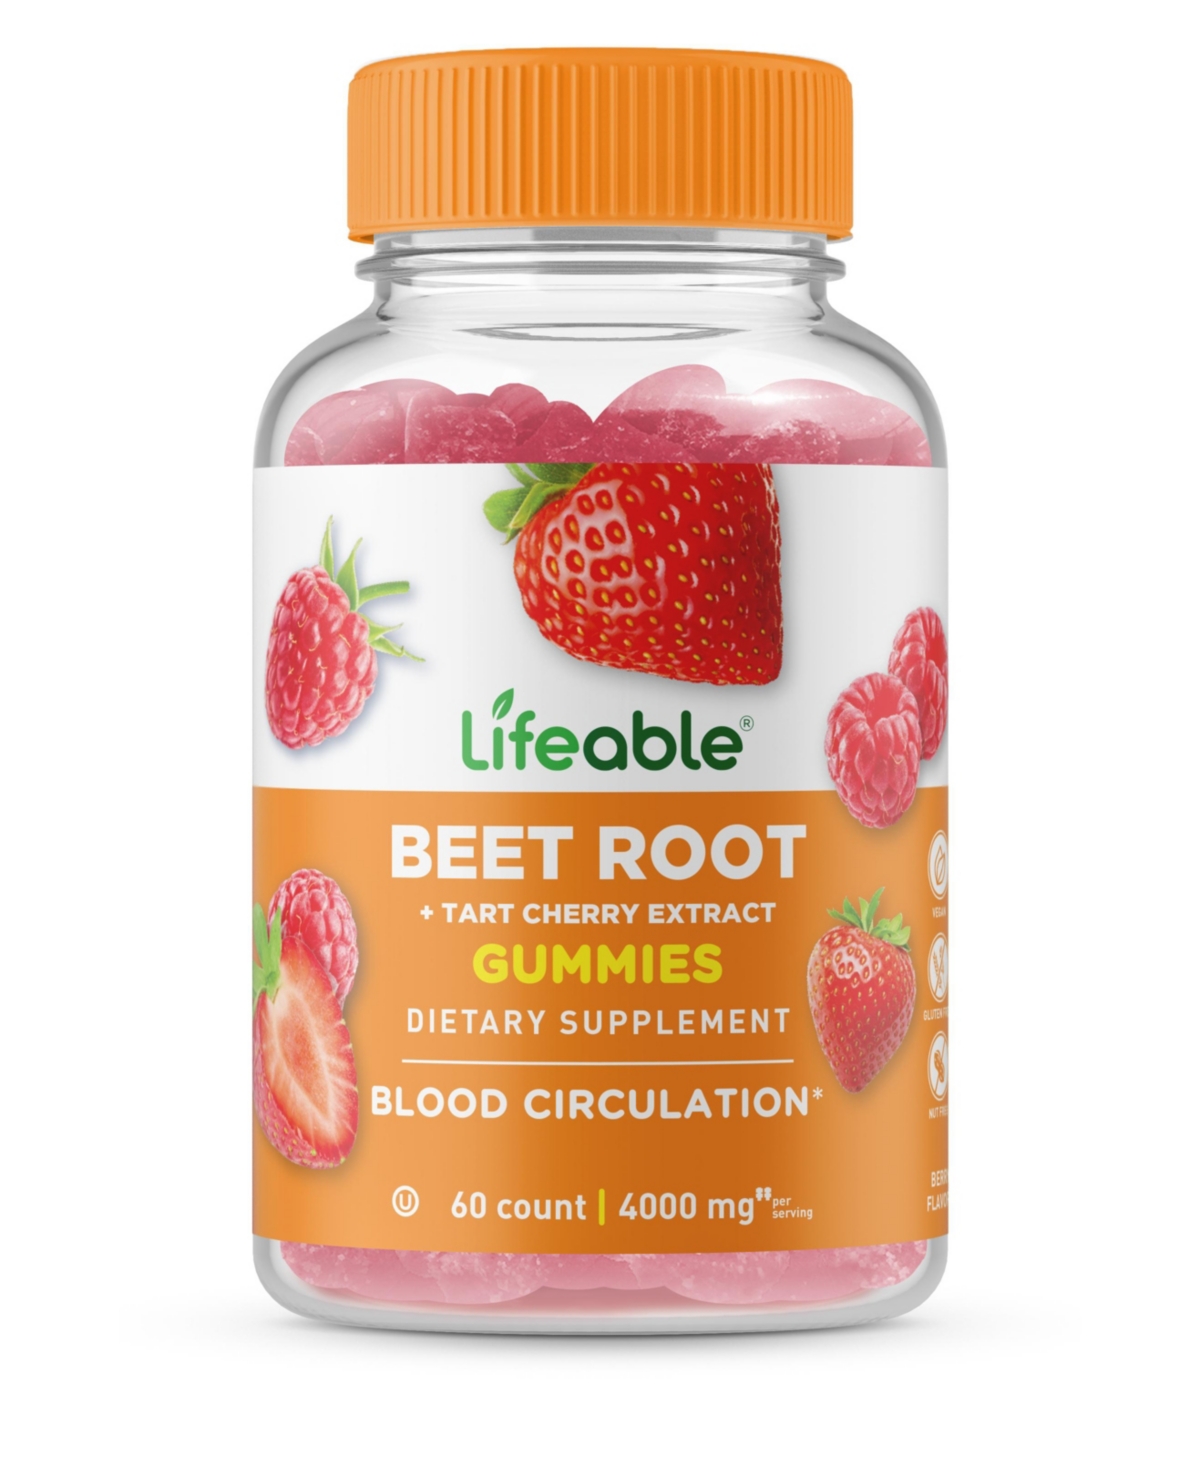 Beet Root Vitamin 500 mg Gummies - Blood Circulation - Great Tasting Natural Flavor, Dietary Supplement Vitamins - 60 Gummies - Open Miscella